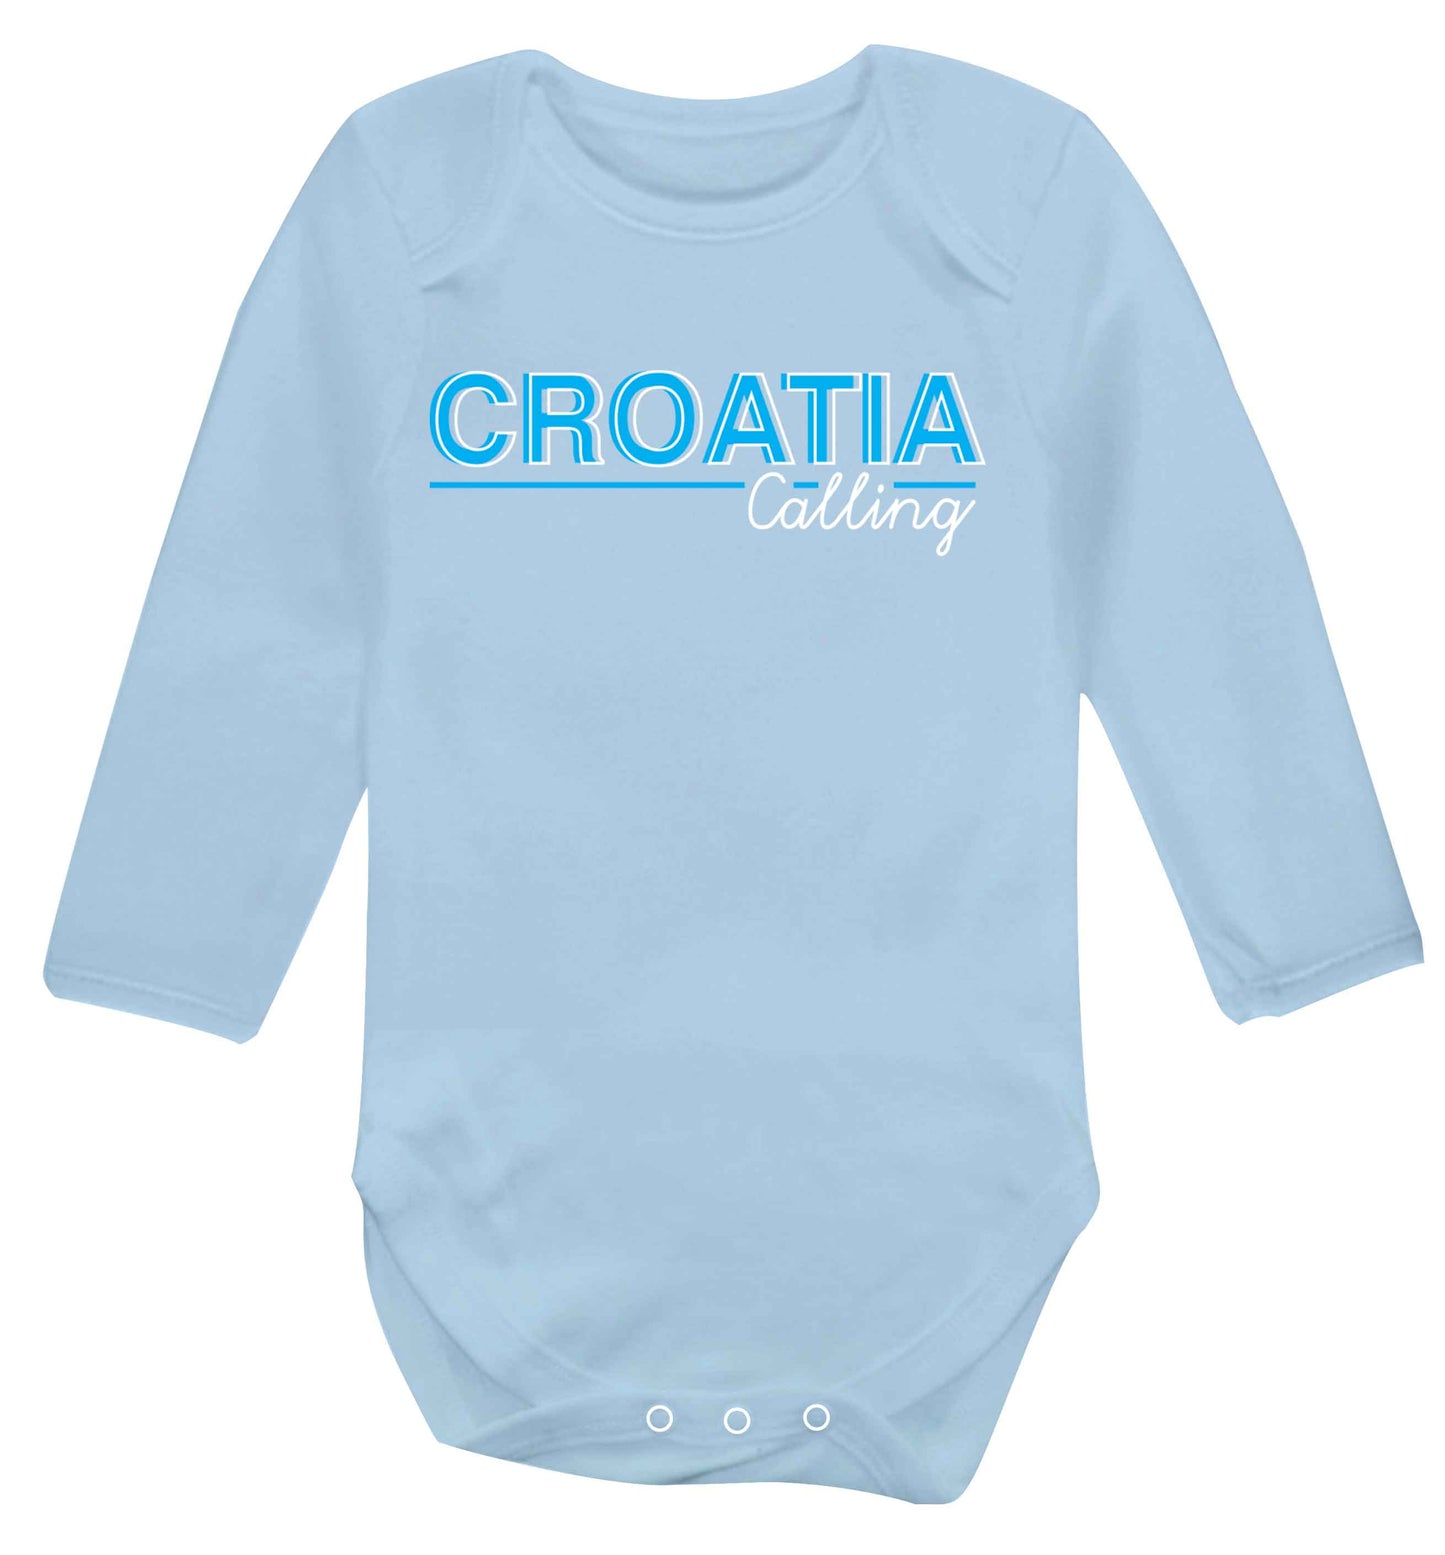 Croatia calling Baby Vest long sleeved pale blue 6-12 months